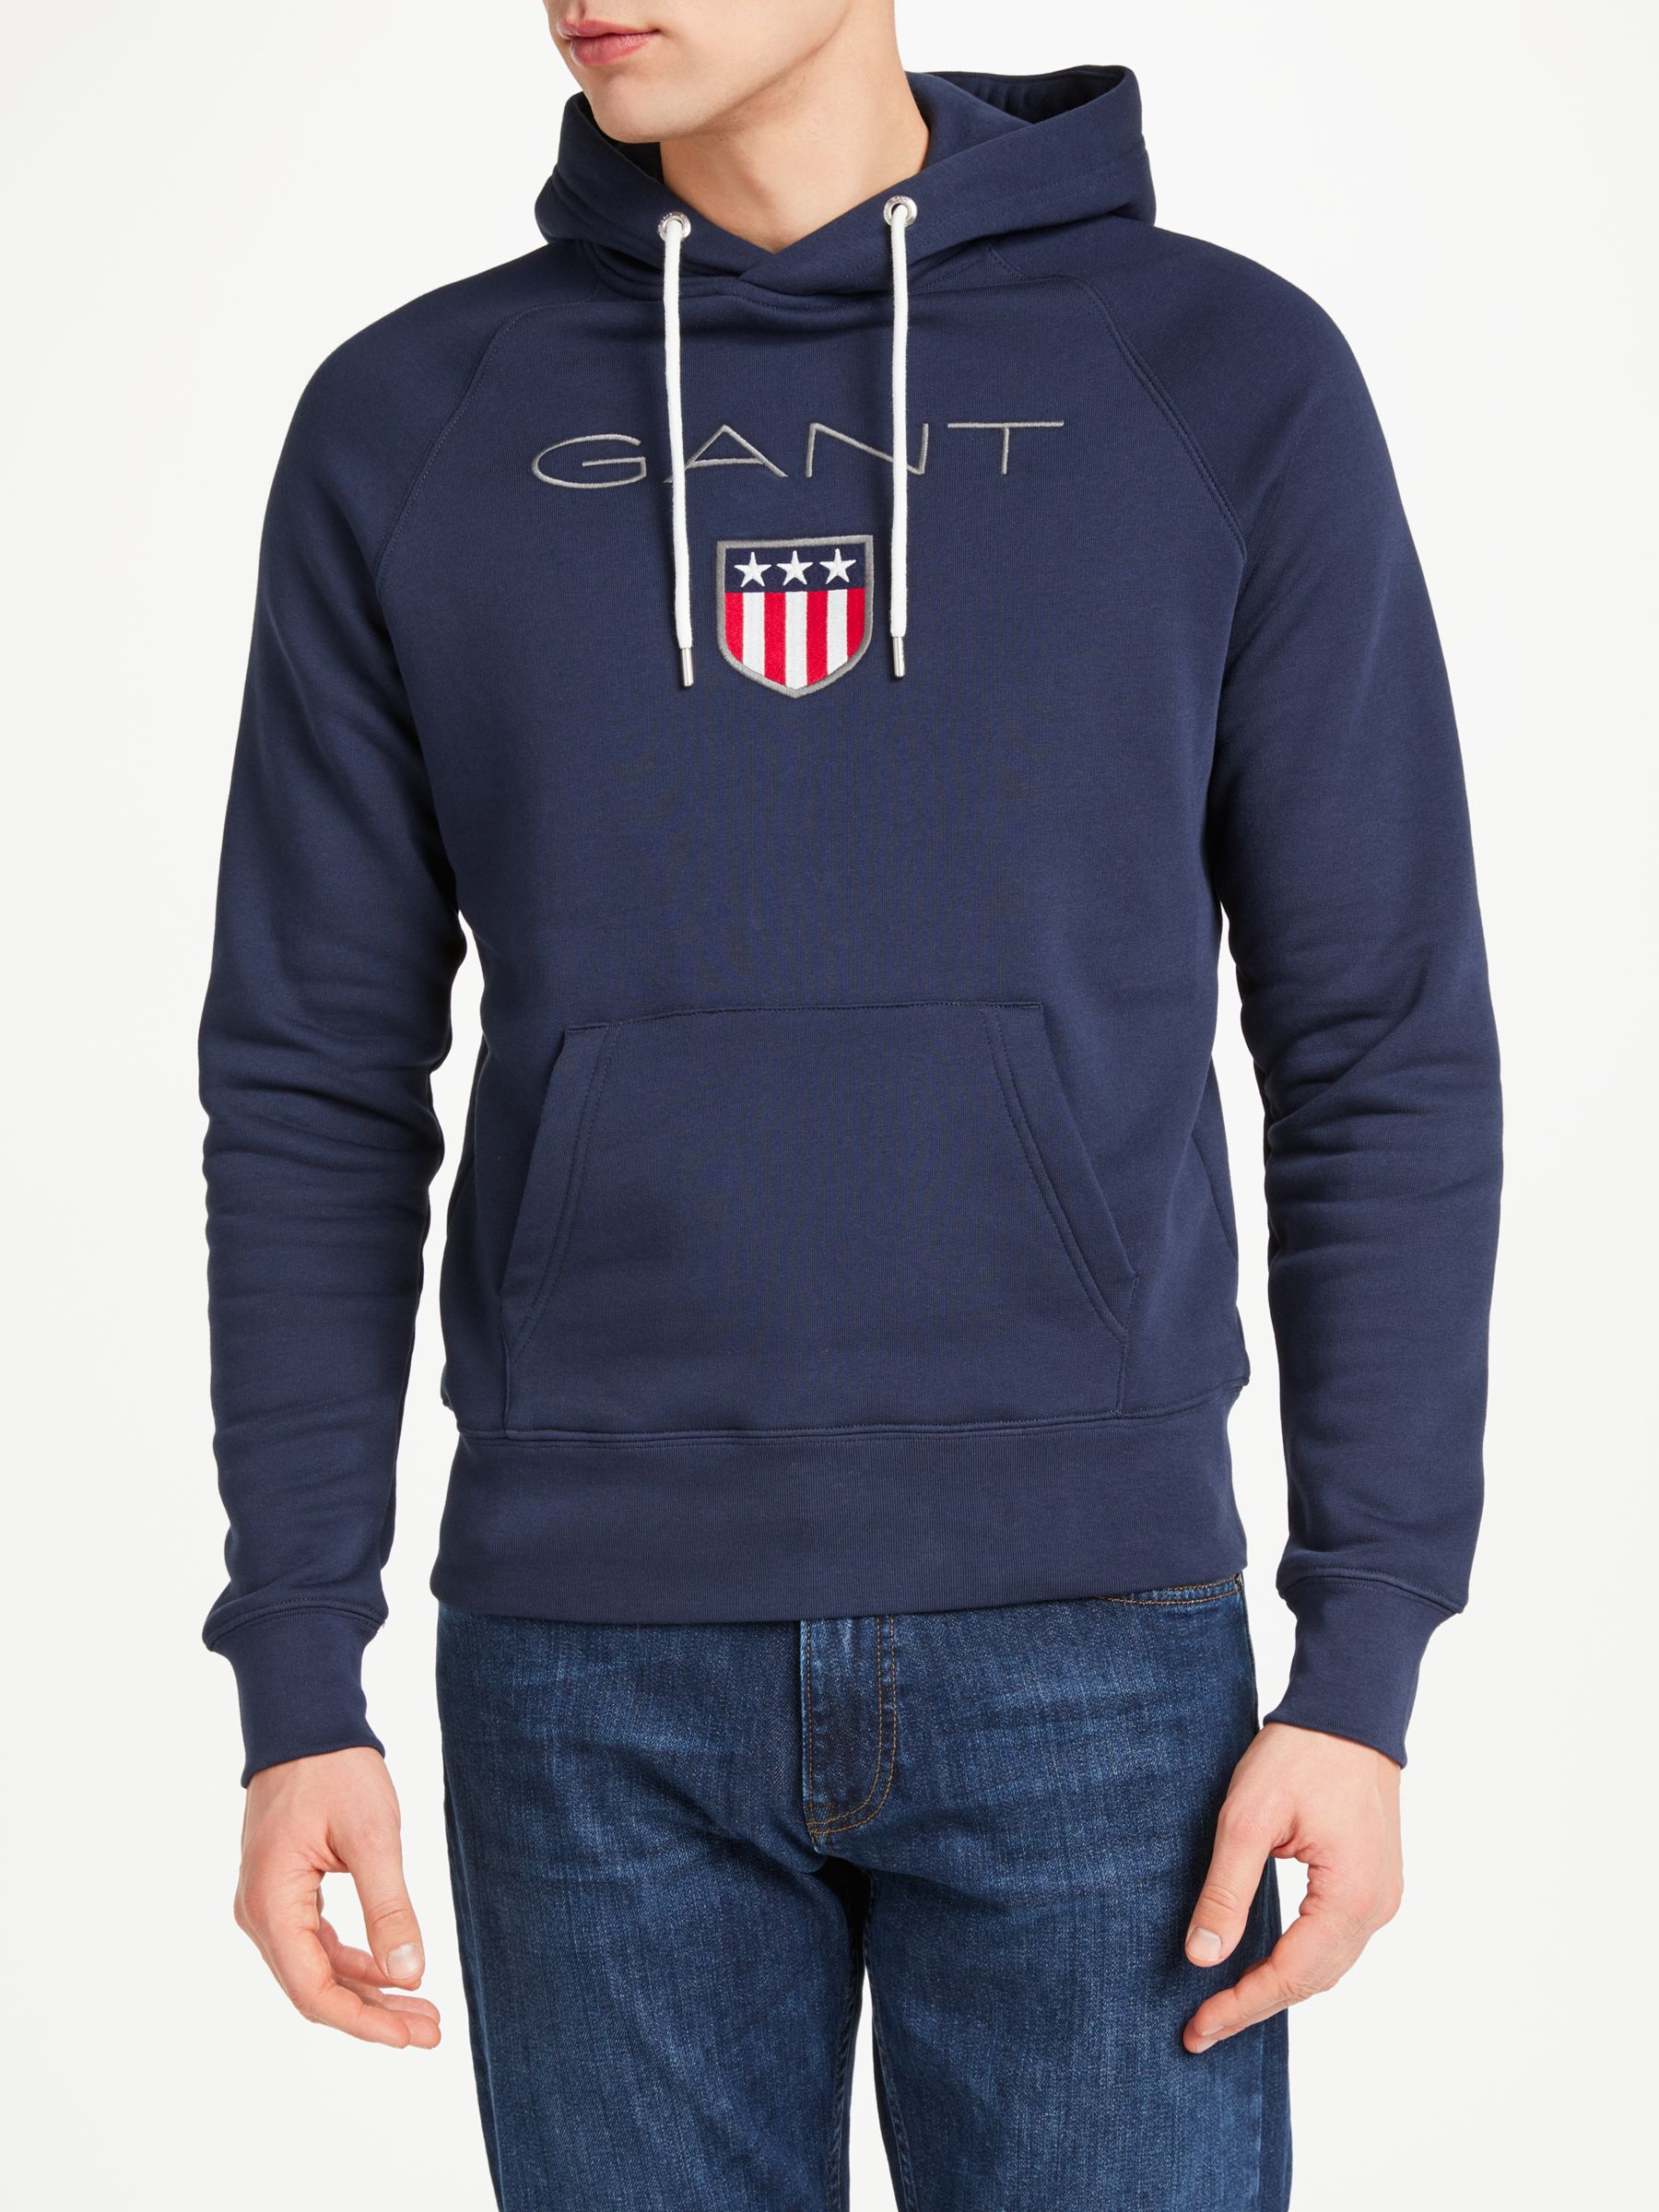 GANT Shield Embroidered Pullover Sweatshirt, Navy, L